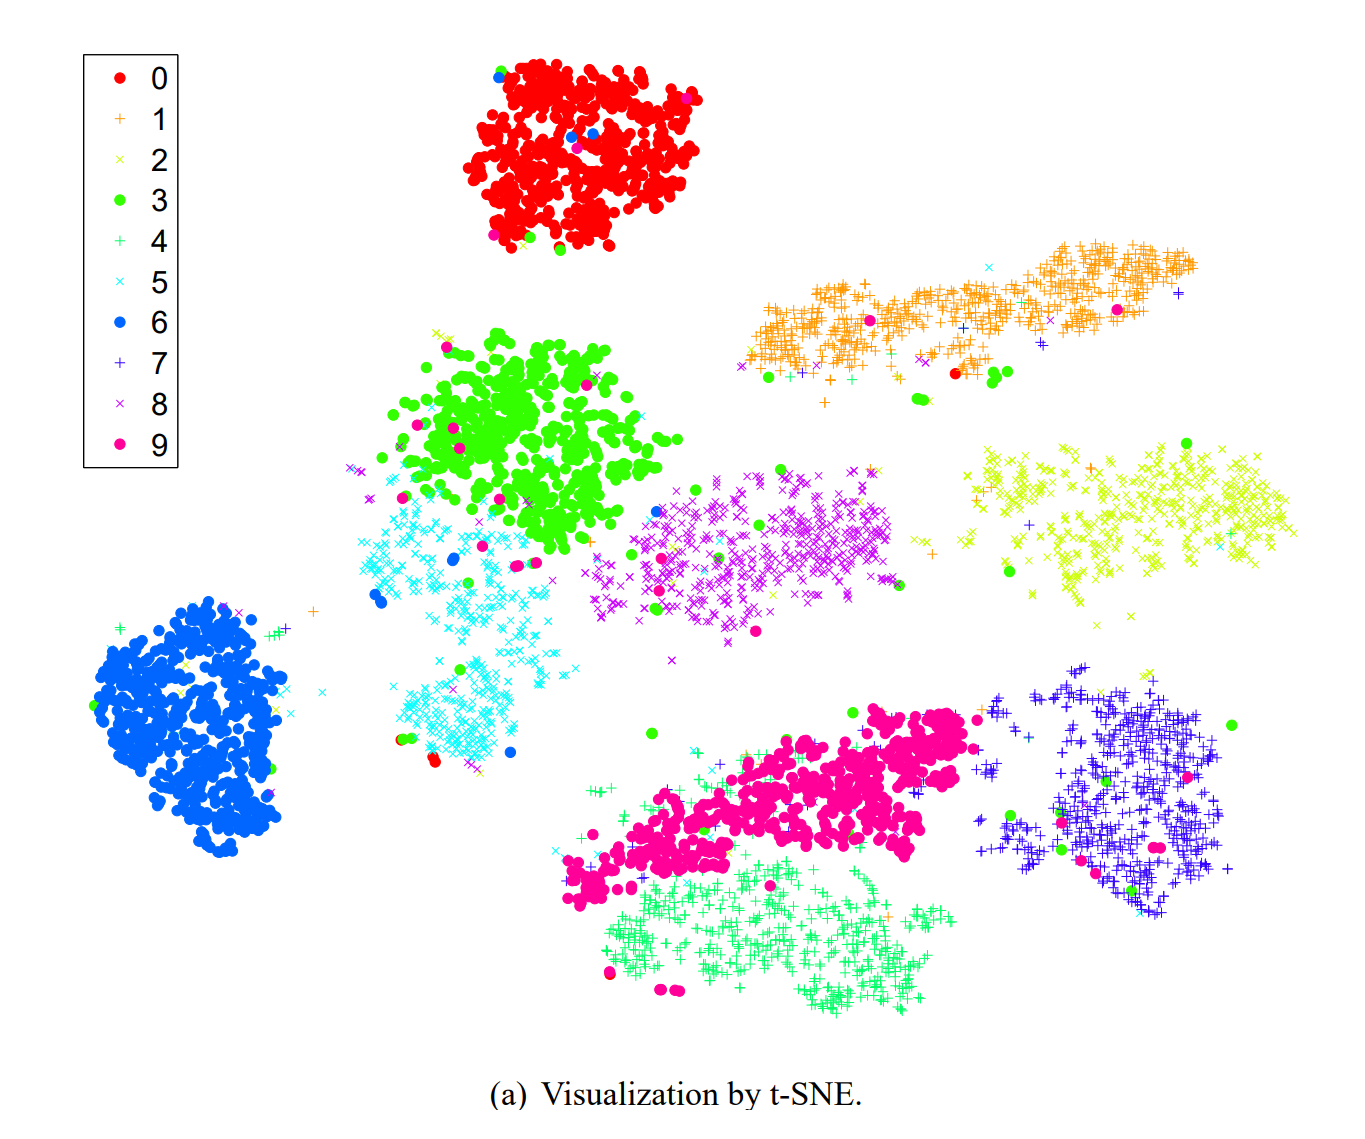 [Paper Review] Visualizing Data using t-Stochastic Nearest Neighbor (t-SNE) (t-SNE, 2008)